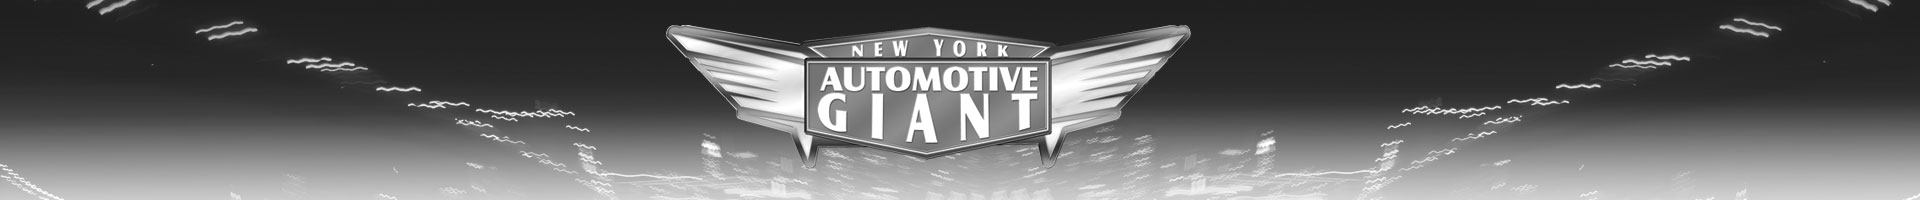 New York Automotive Giant